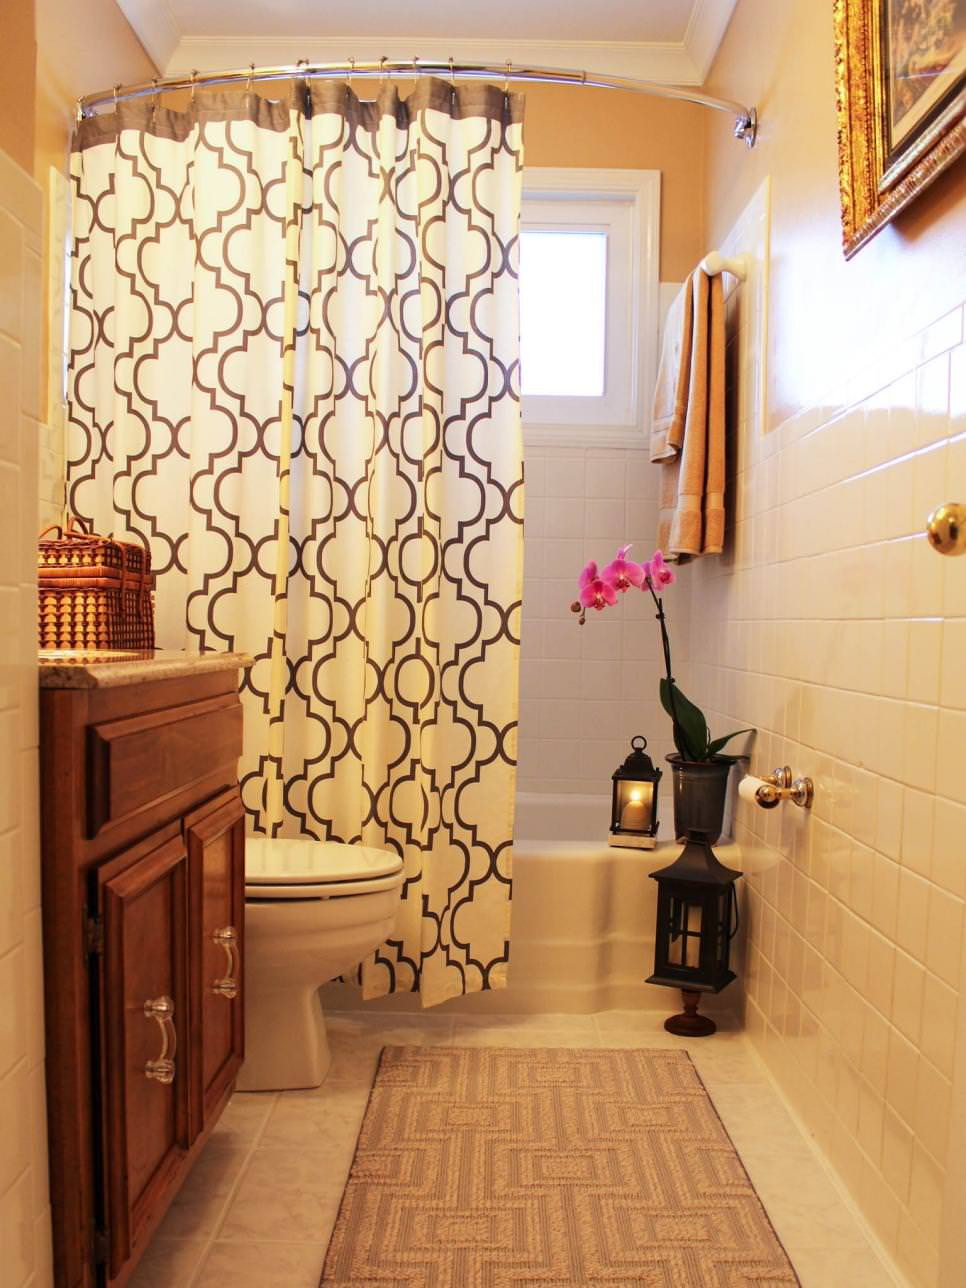 Bathroom Shower Curtain Decorating Ideas
 18 Bathroom Curtain Designs Decorating Ideas